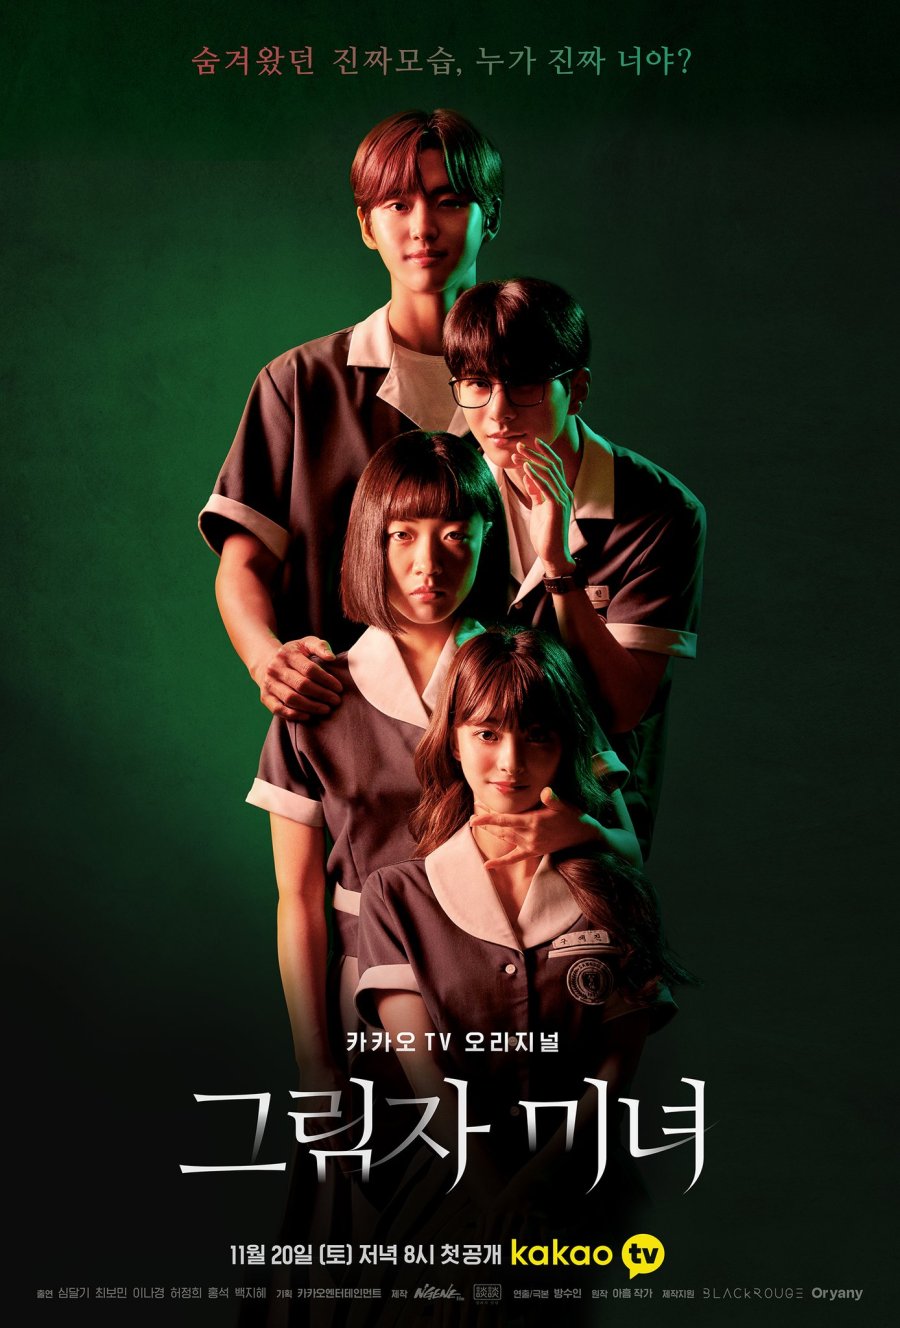 Download Drama Korea Shadow Beauty Subtitle Indonesia